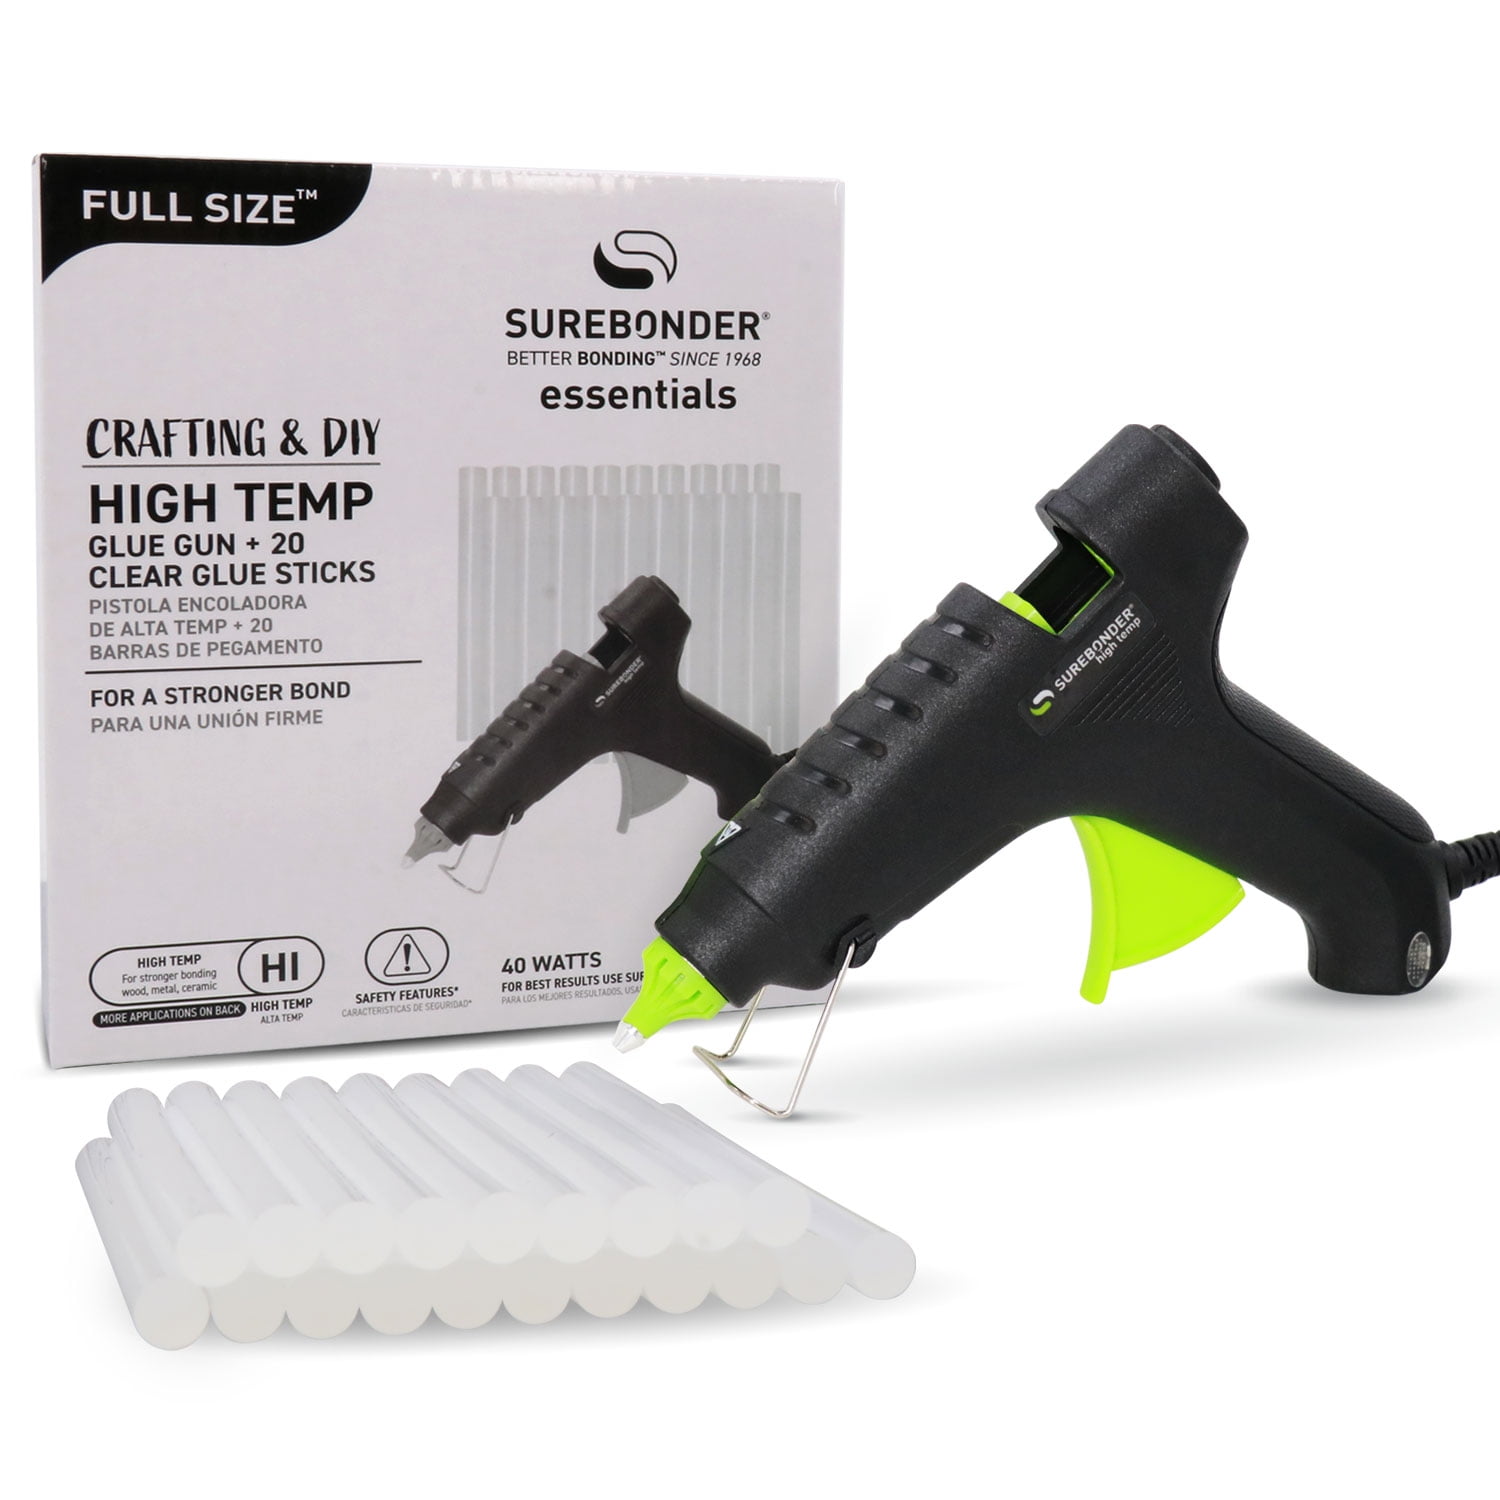 High or Low Temp Glue Guns? (40w vs. 60w) - Melting points, wattage & uses  